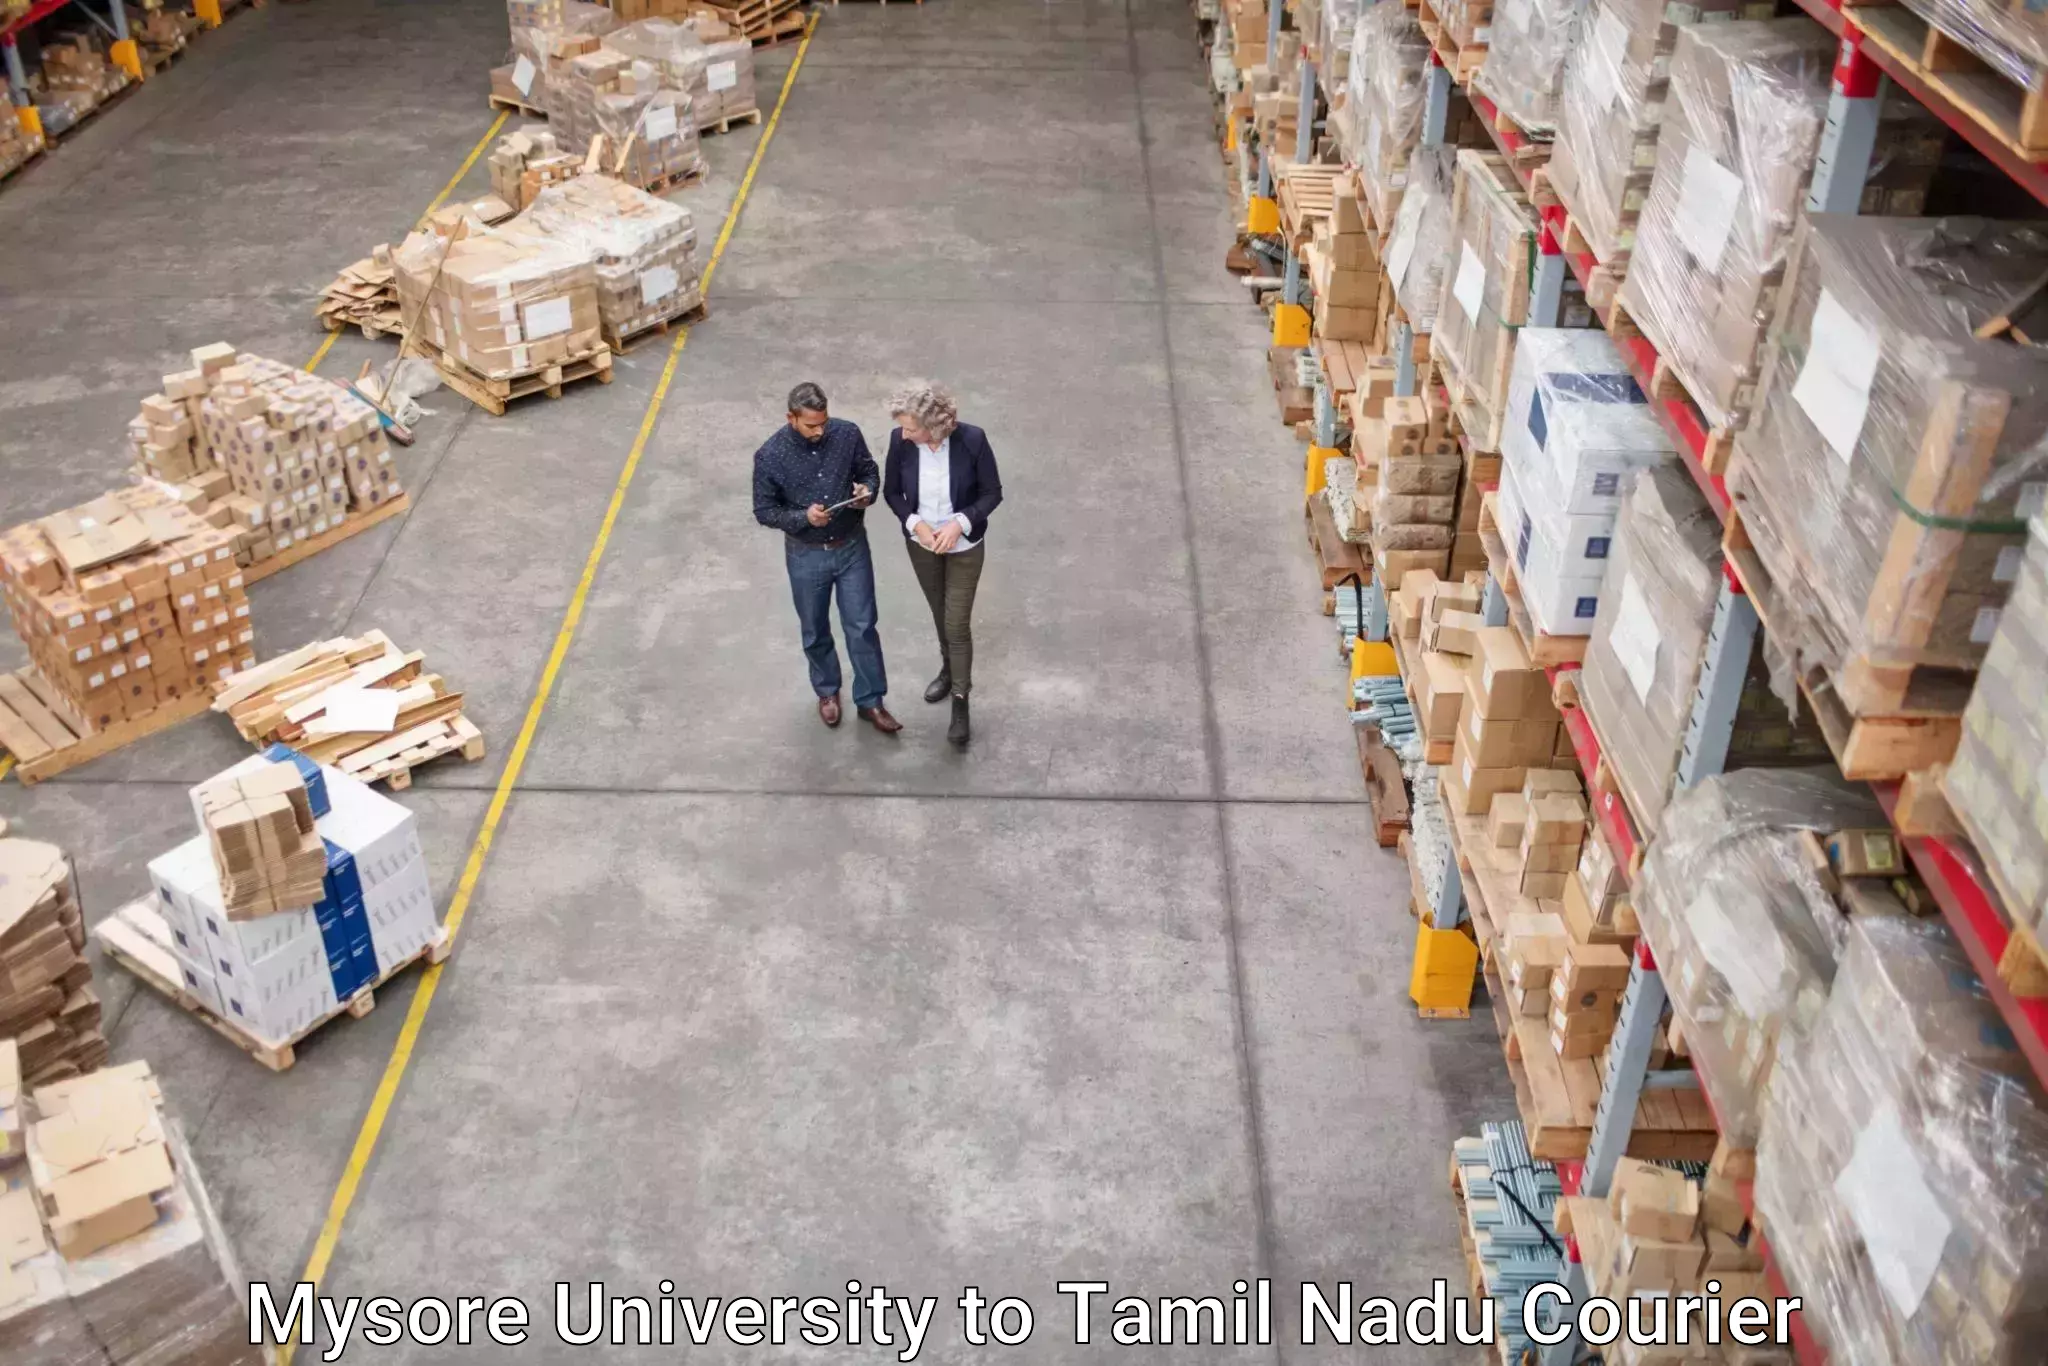 Courier service comparison Mysore University to Chennai Port